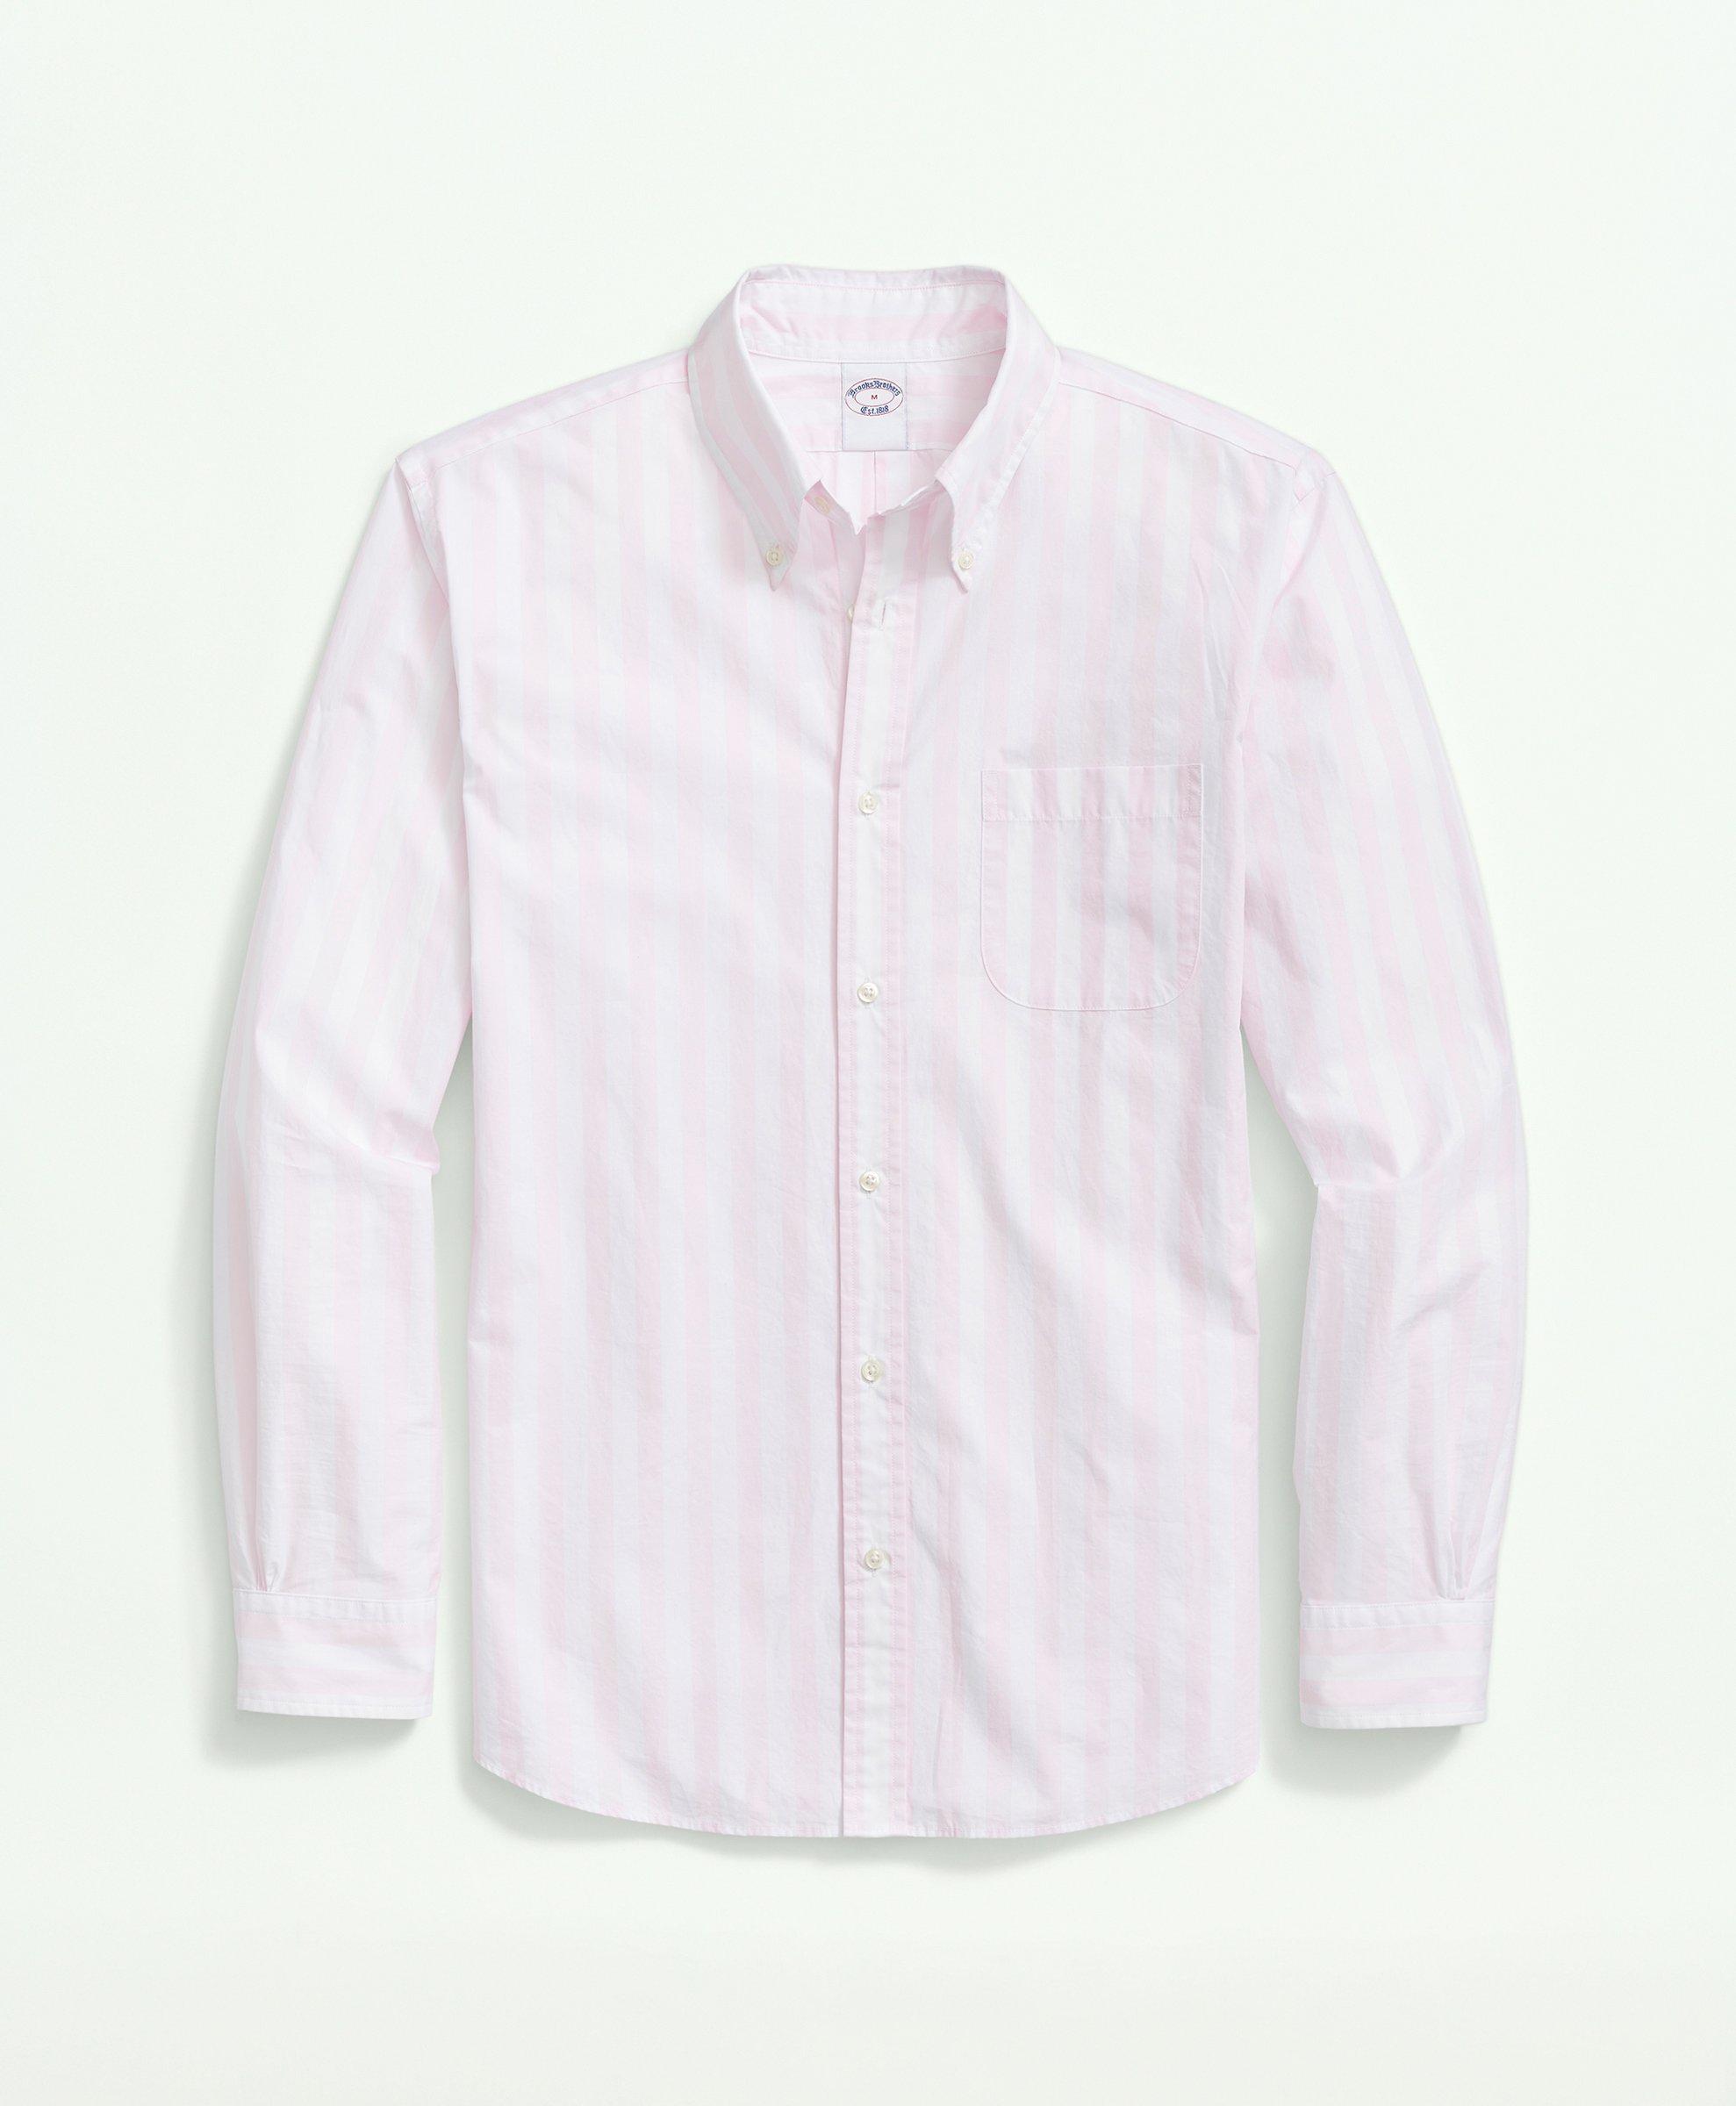 Friday Shirt, Poplin Striped, image 1